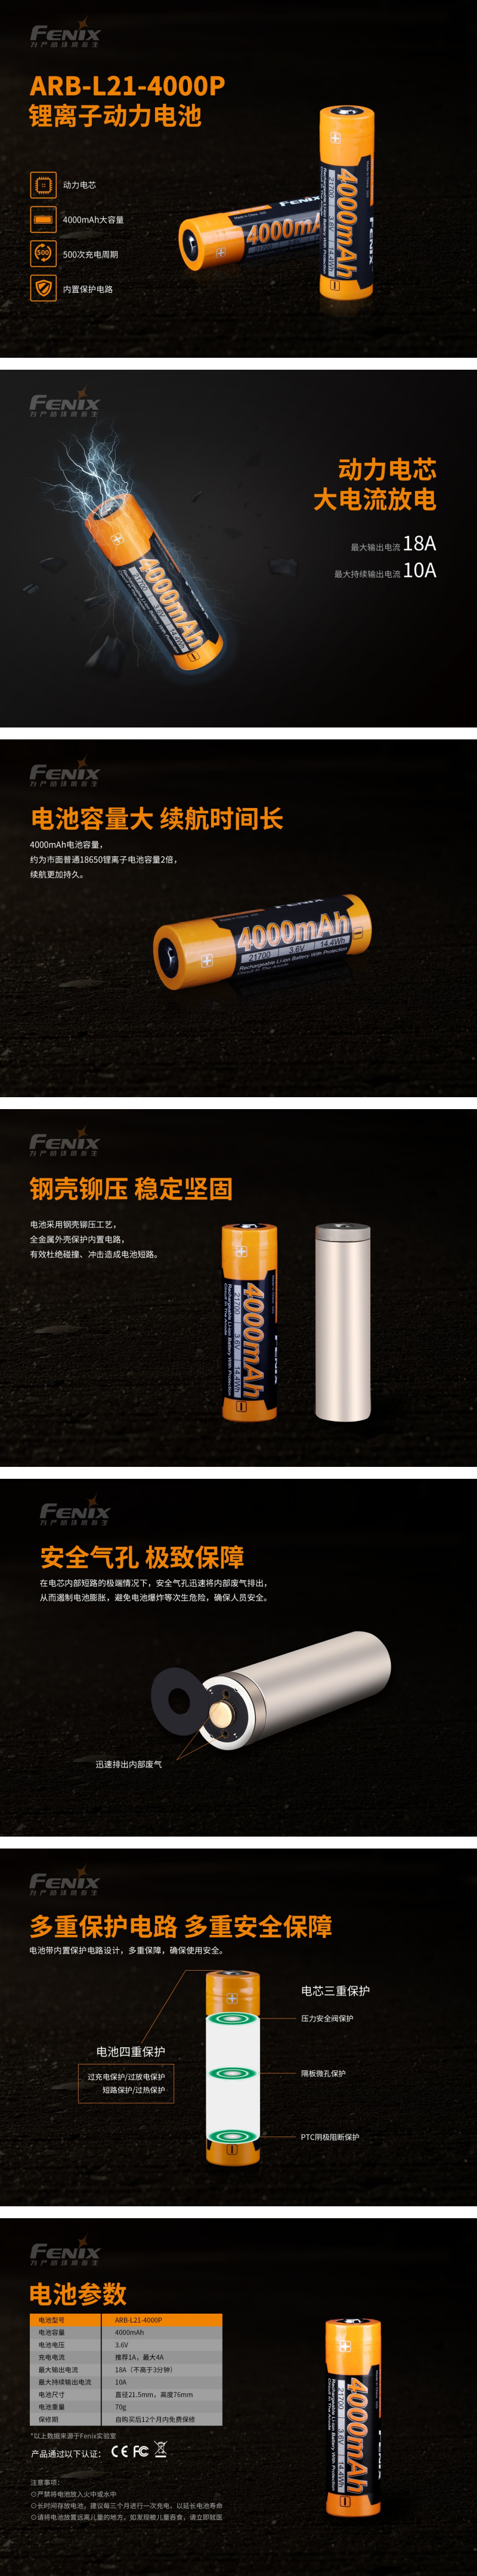 【FENIX】ARB-L21-4000P 高動力 21700電池 高放電 18A l 適用 手電筒 LR35R   TK20R V2   PD36R TAC